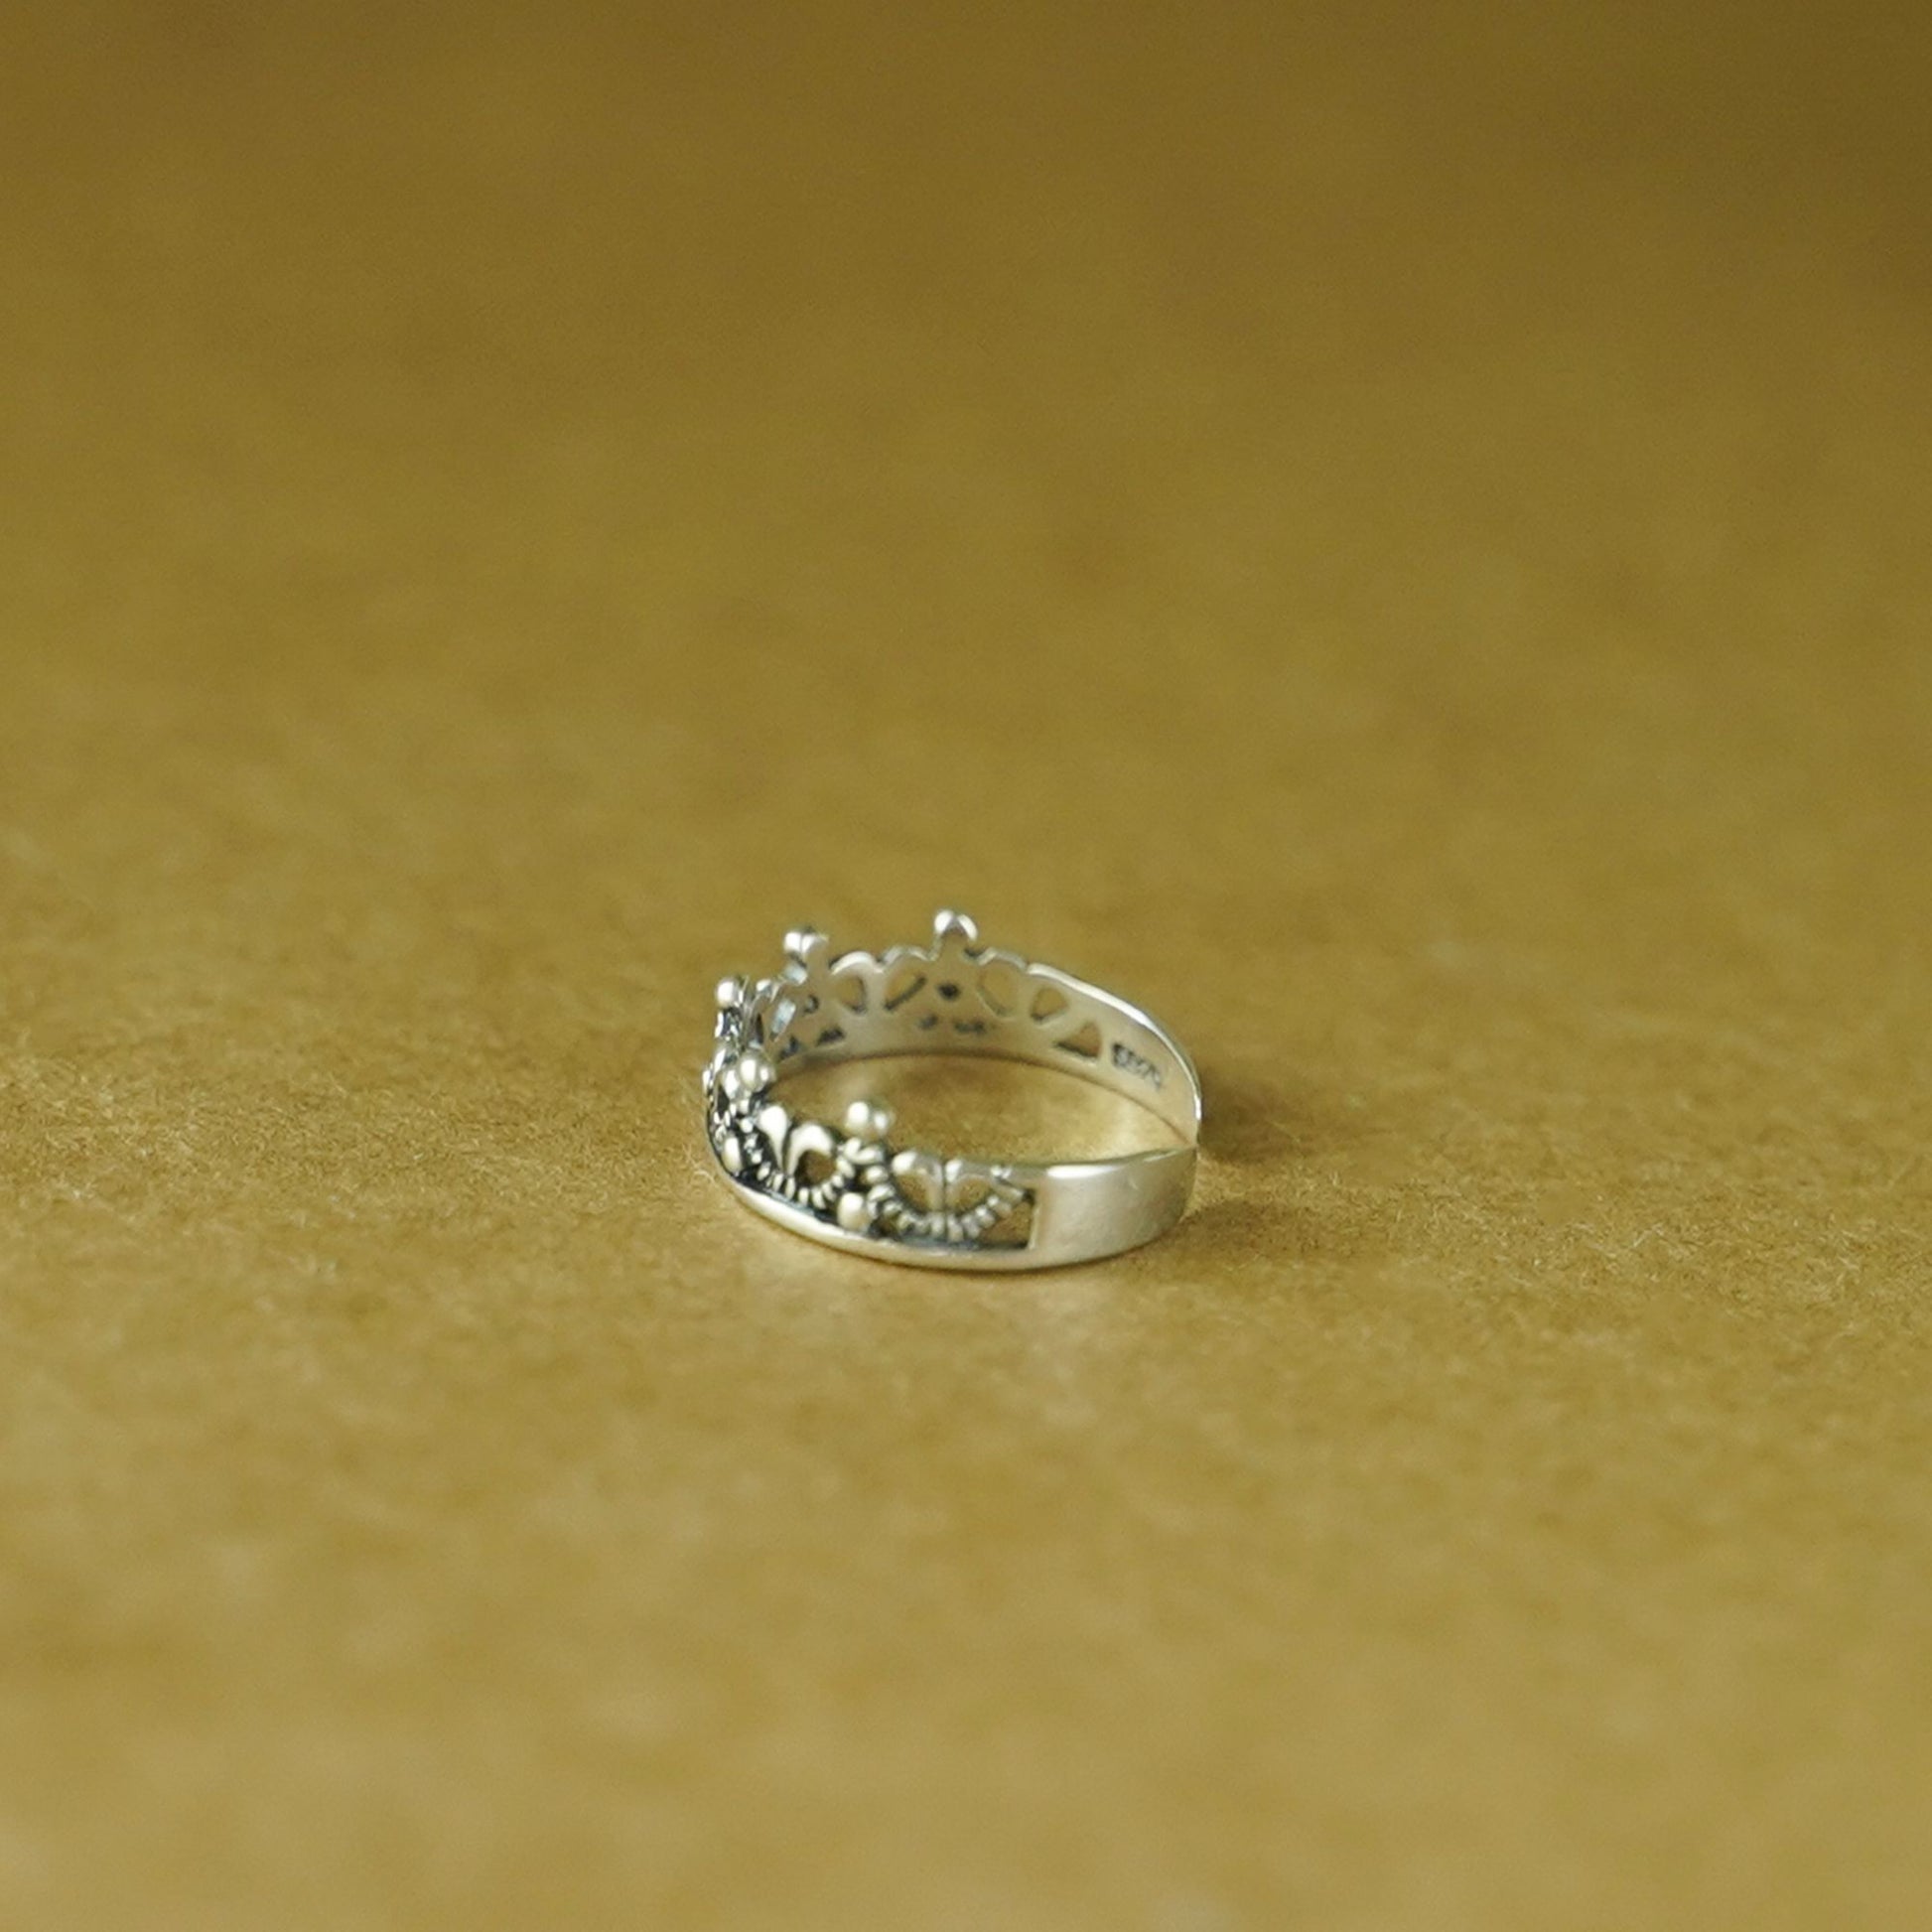 Sterling Silver Oxidized Royal Tiara Coronation Crown Toe Ring Pinky Ring - sugarkittenlondon